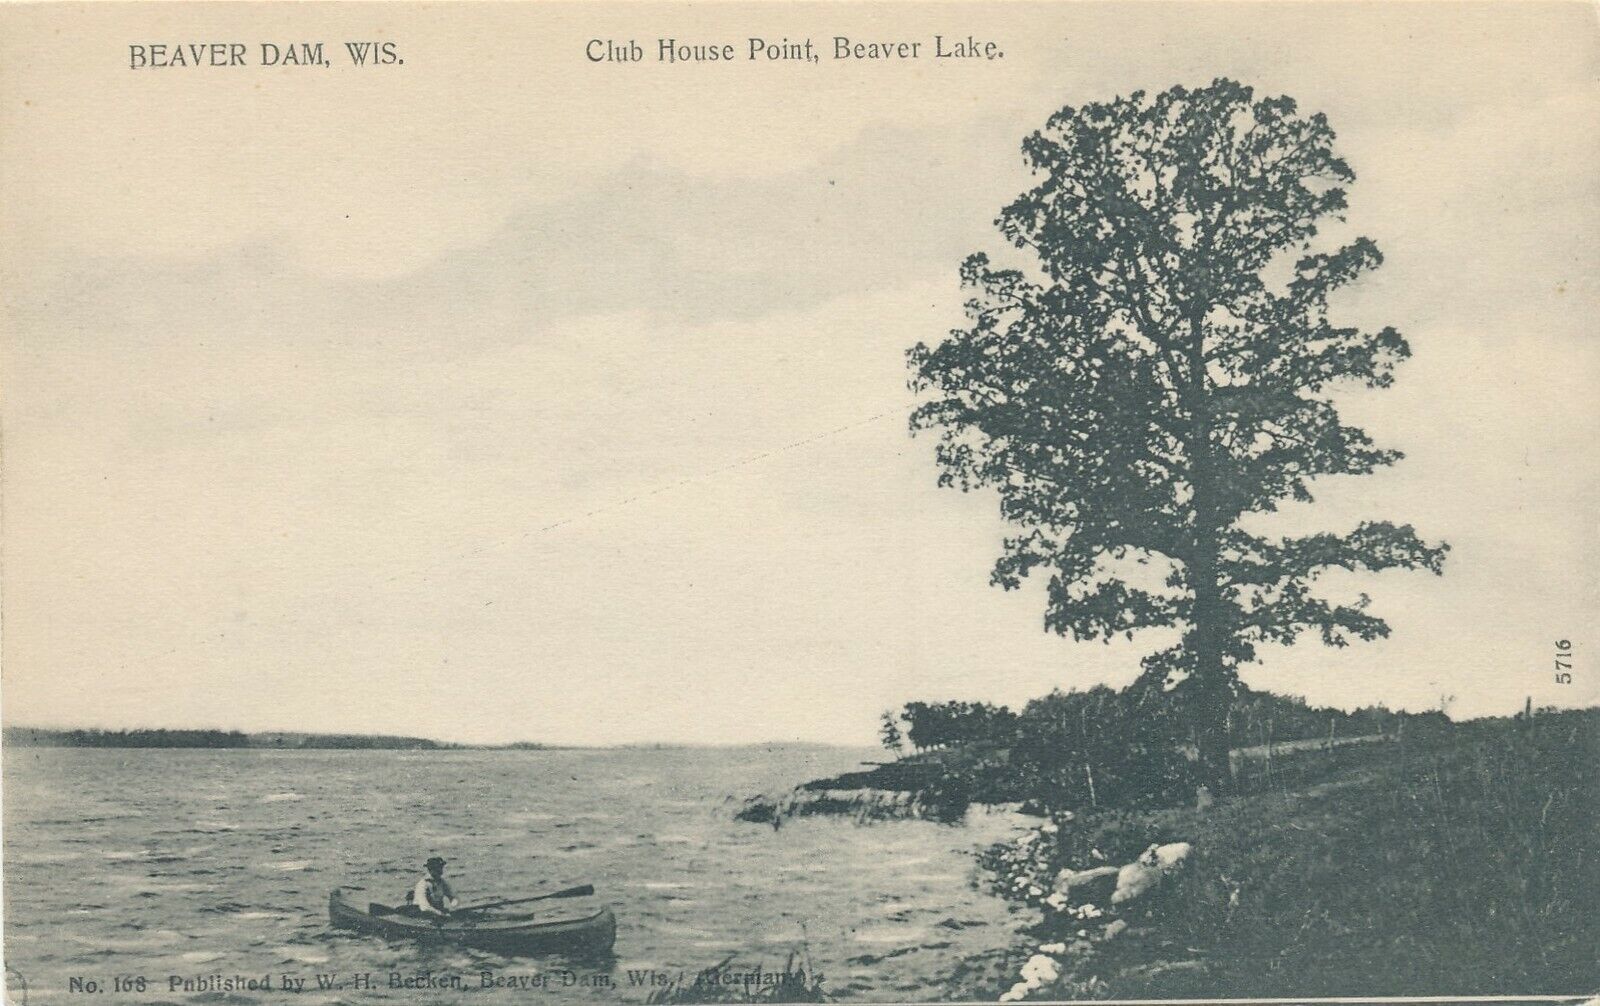 BEAVER DAM WI – Beaver Lake Club House Point